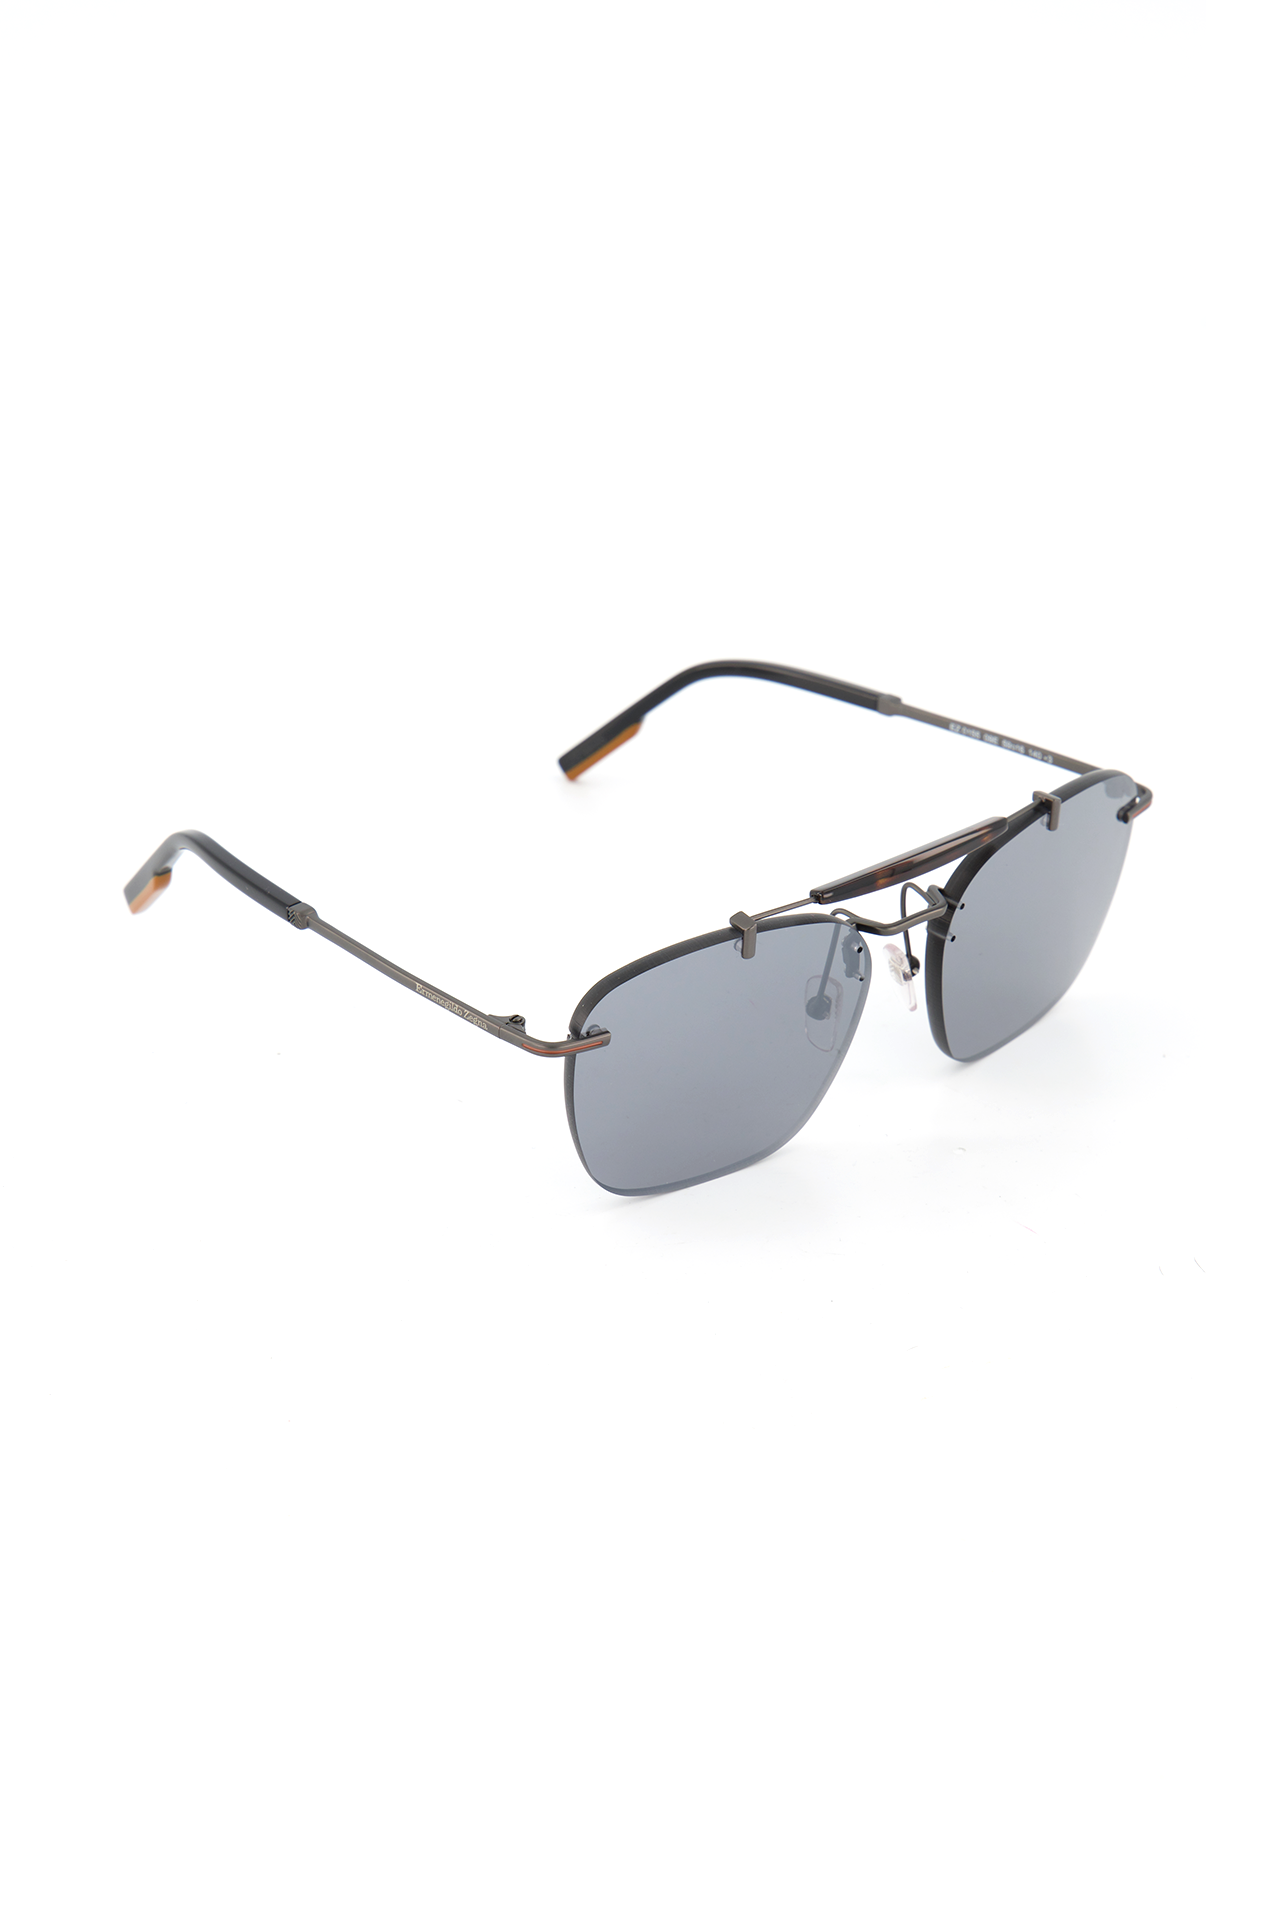 Semi-Shiny Gunmetal Sunglasses (6599931166835)